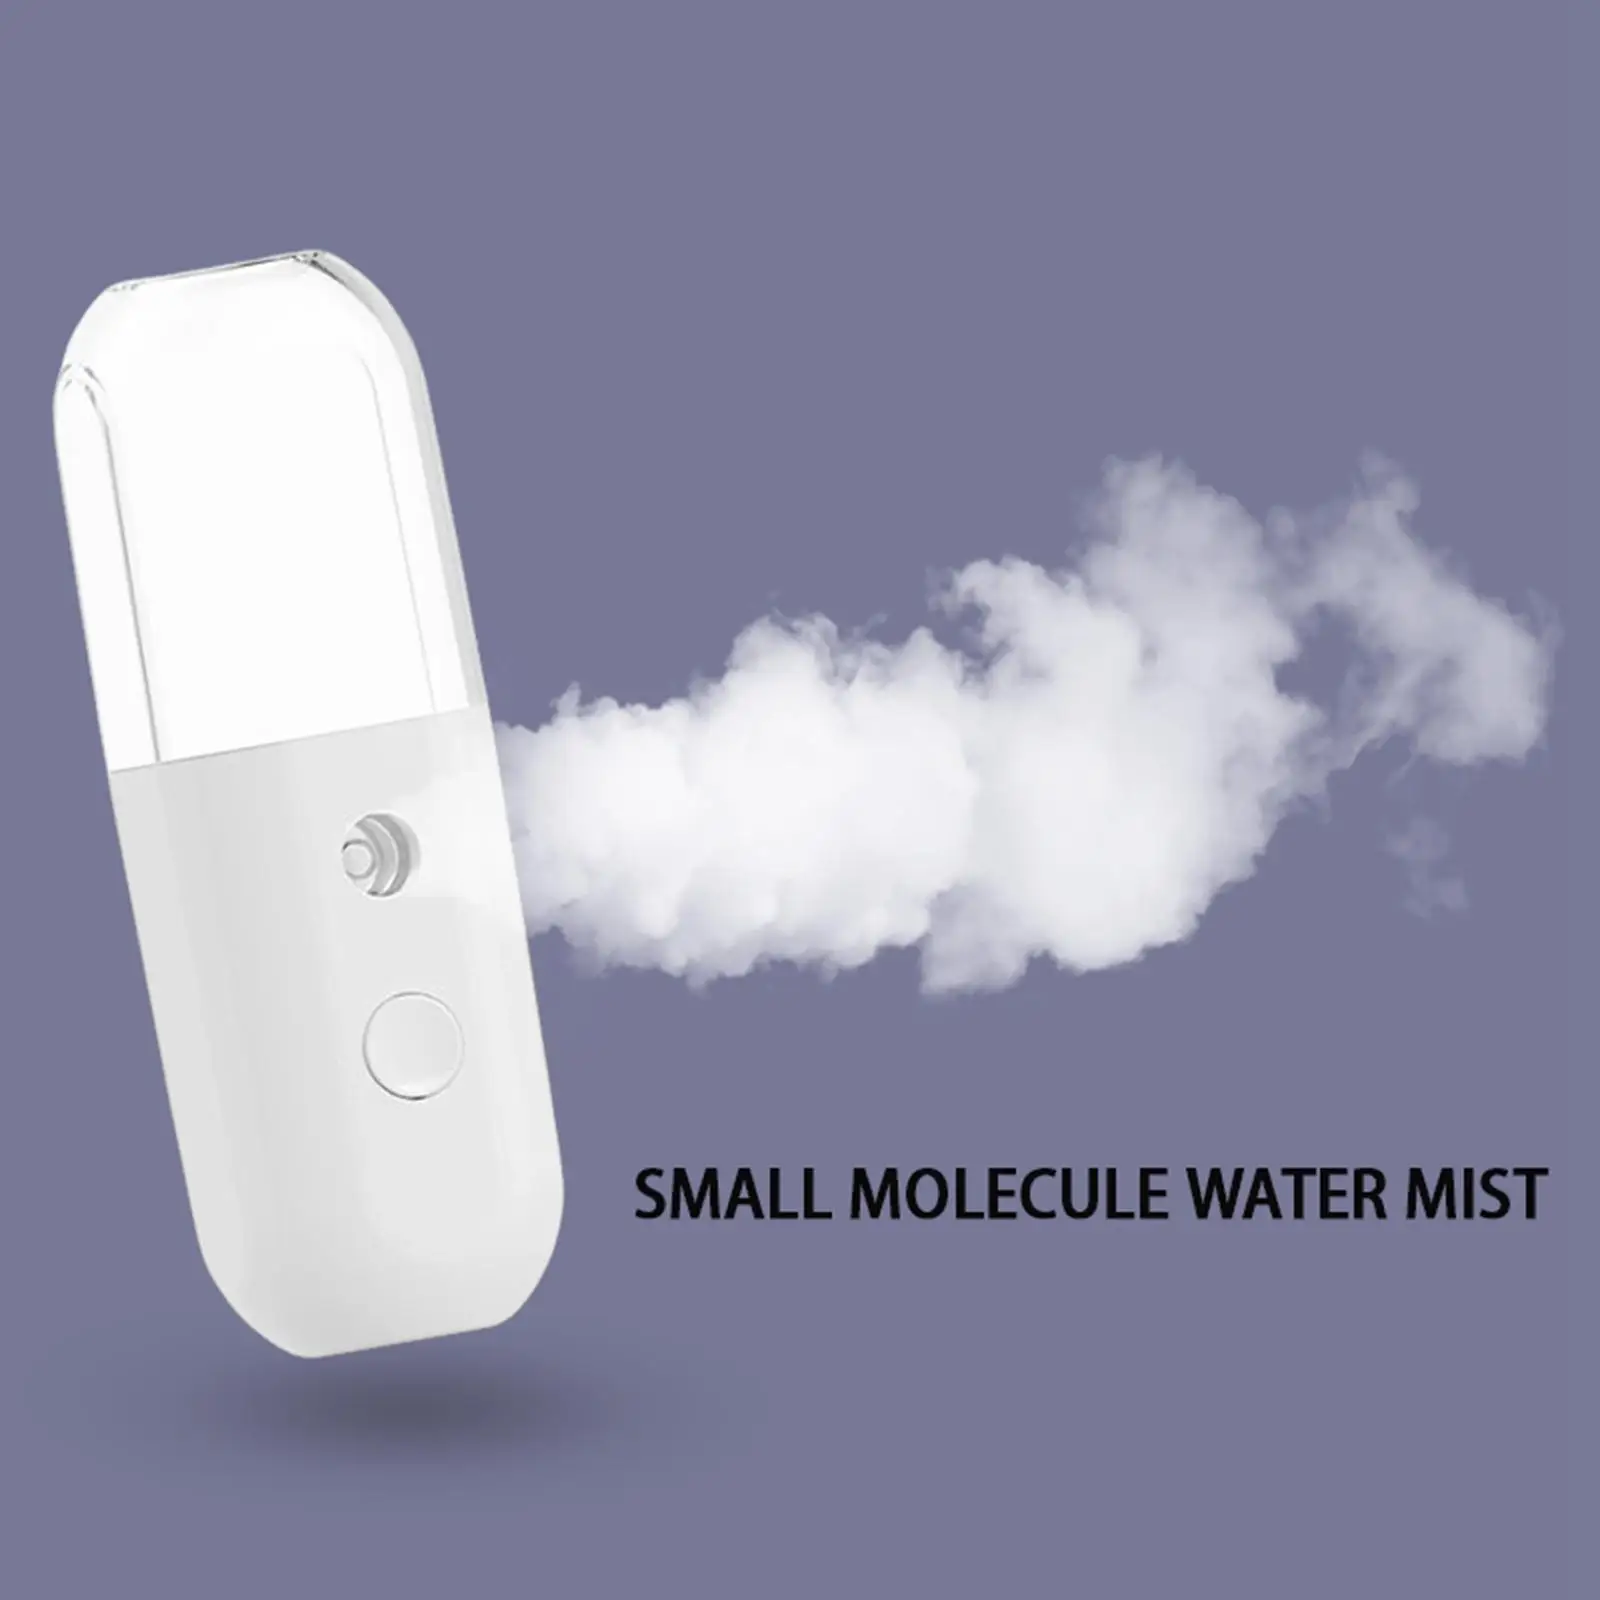 Mini Handy Nano Facial Mister, Moisturizing 30ml Visual Water Tank Portable Facial Sprayer for Skin Care Daily Makeup